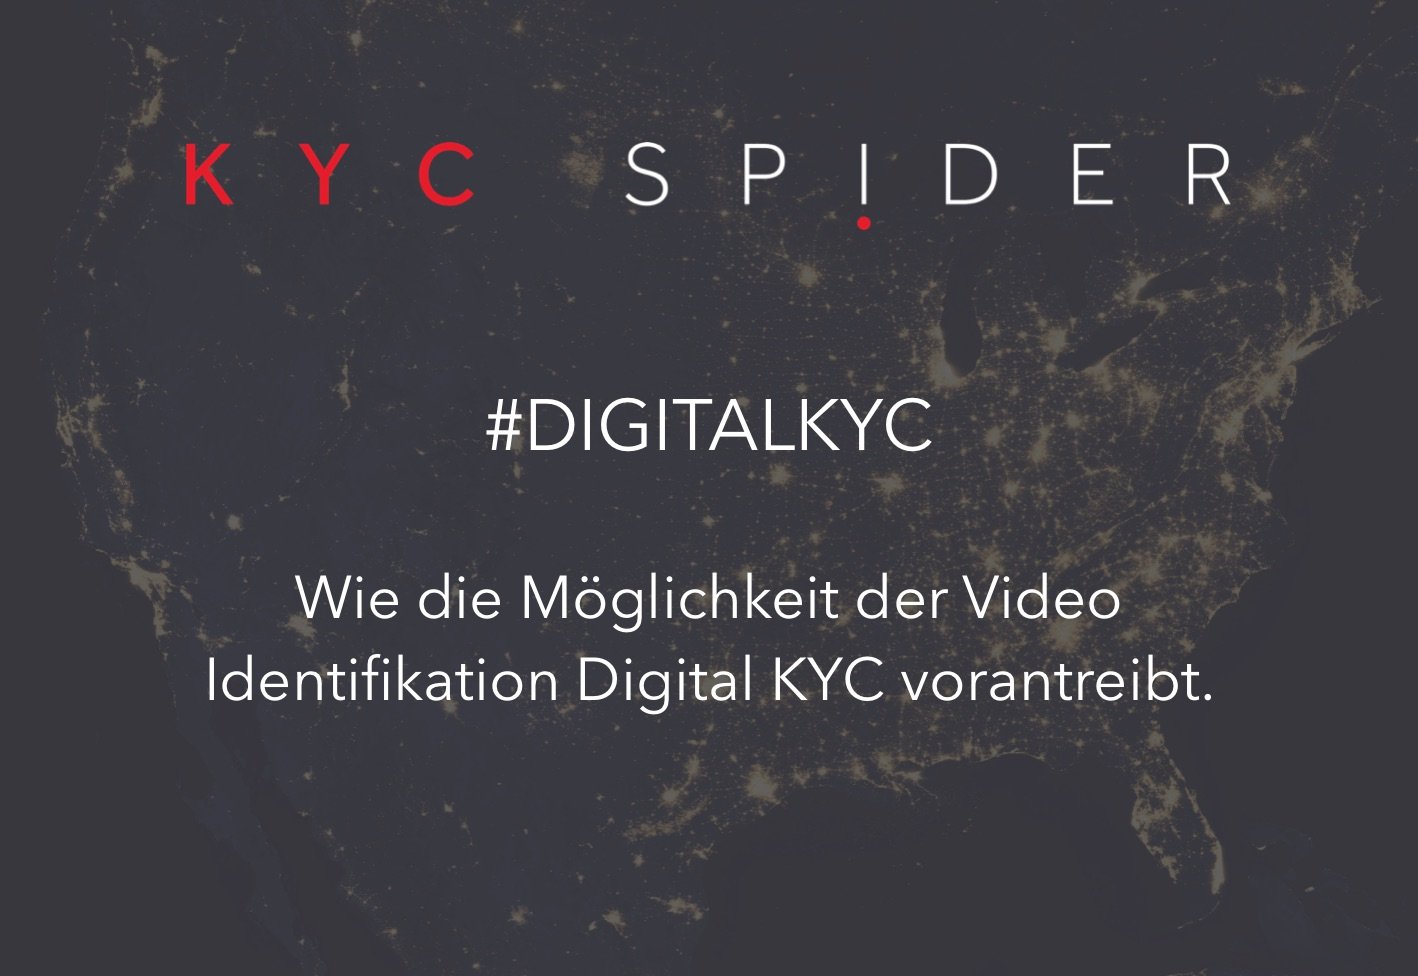 KYC Spider_DigitalKYC_VideoIdentification